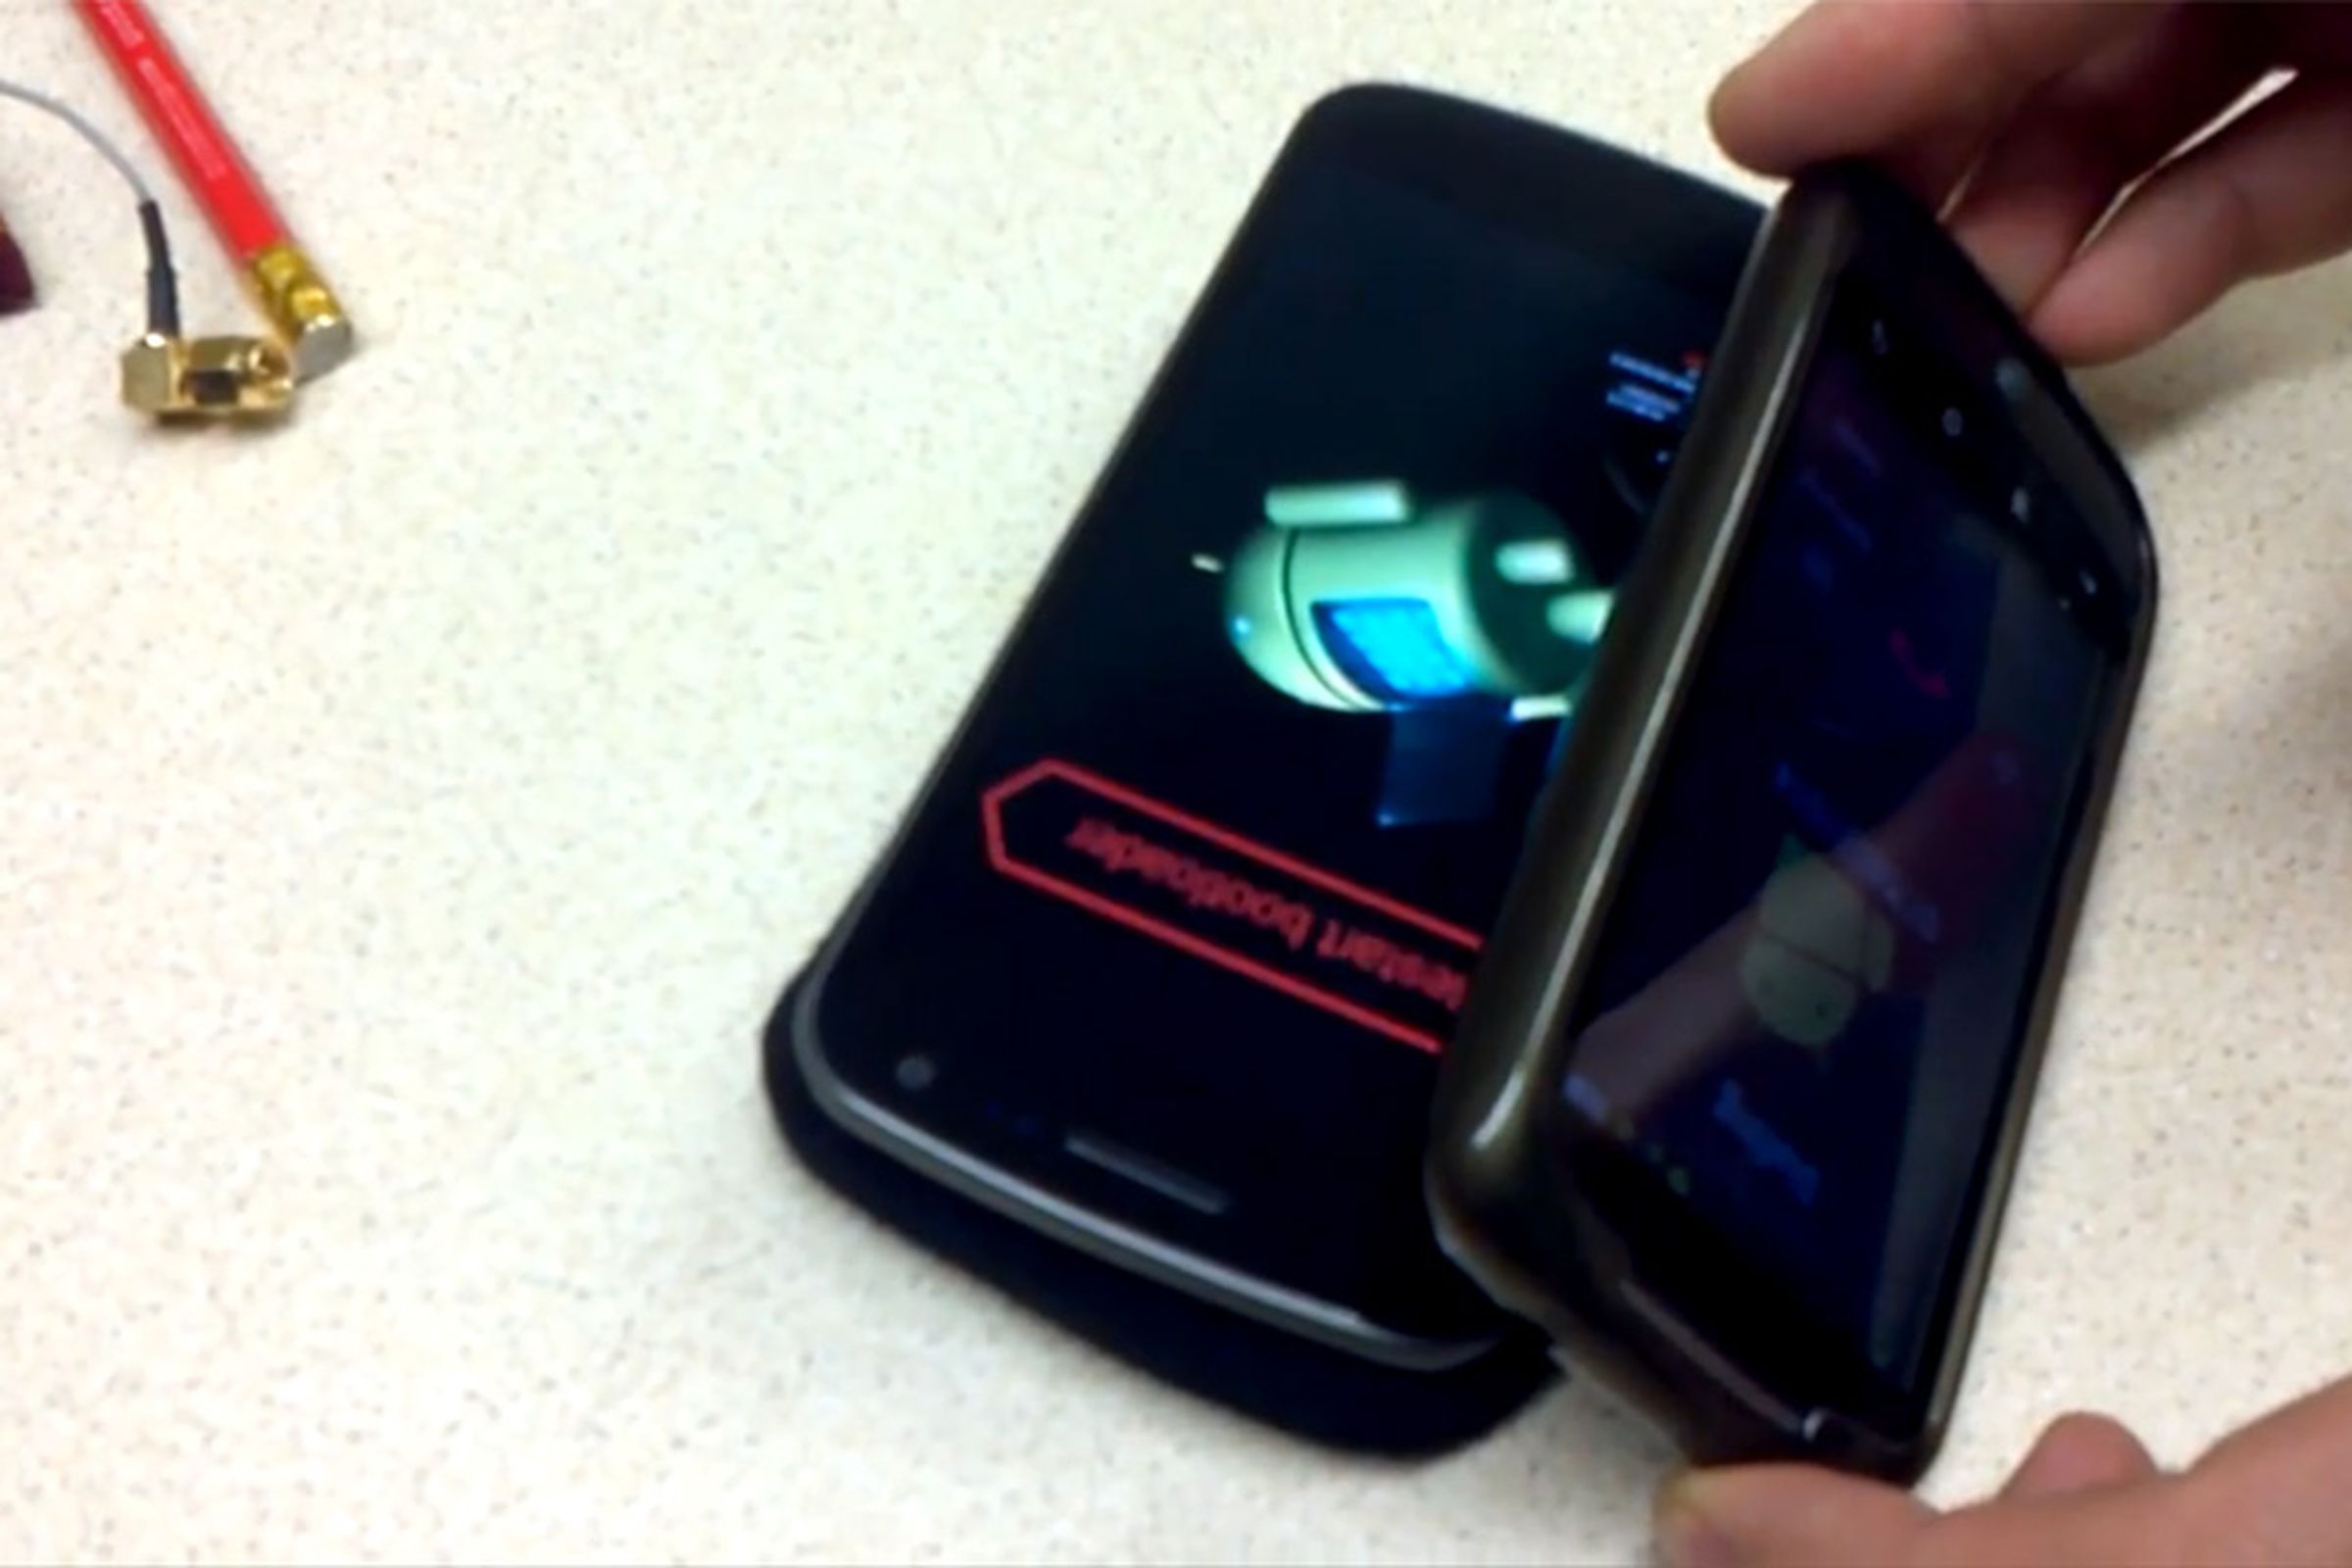 Galaxy Nexus interference demo